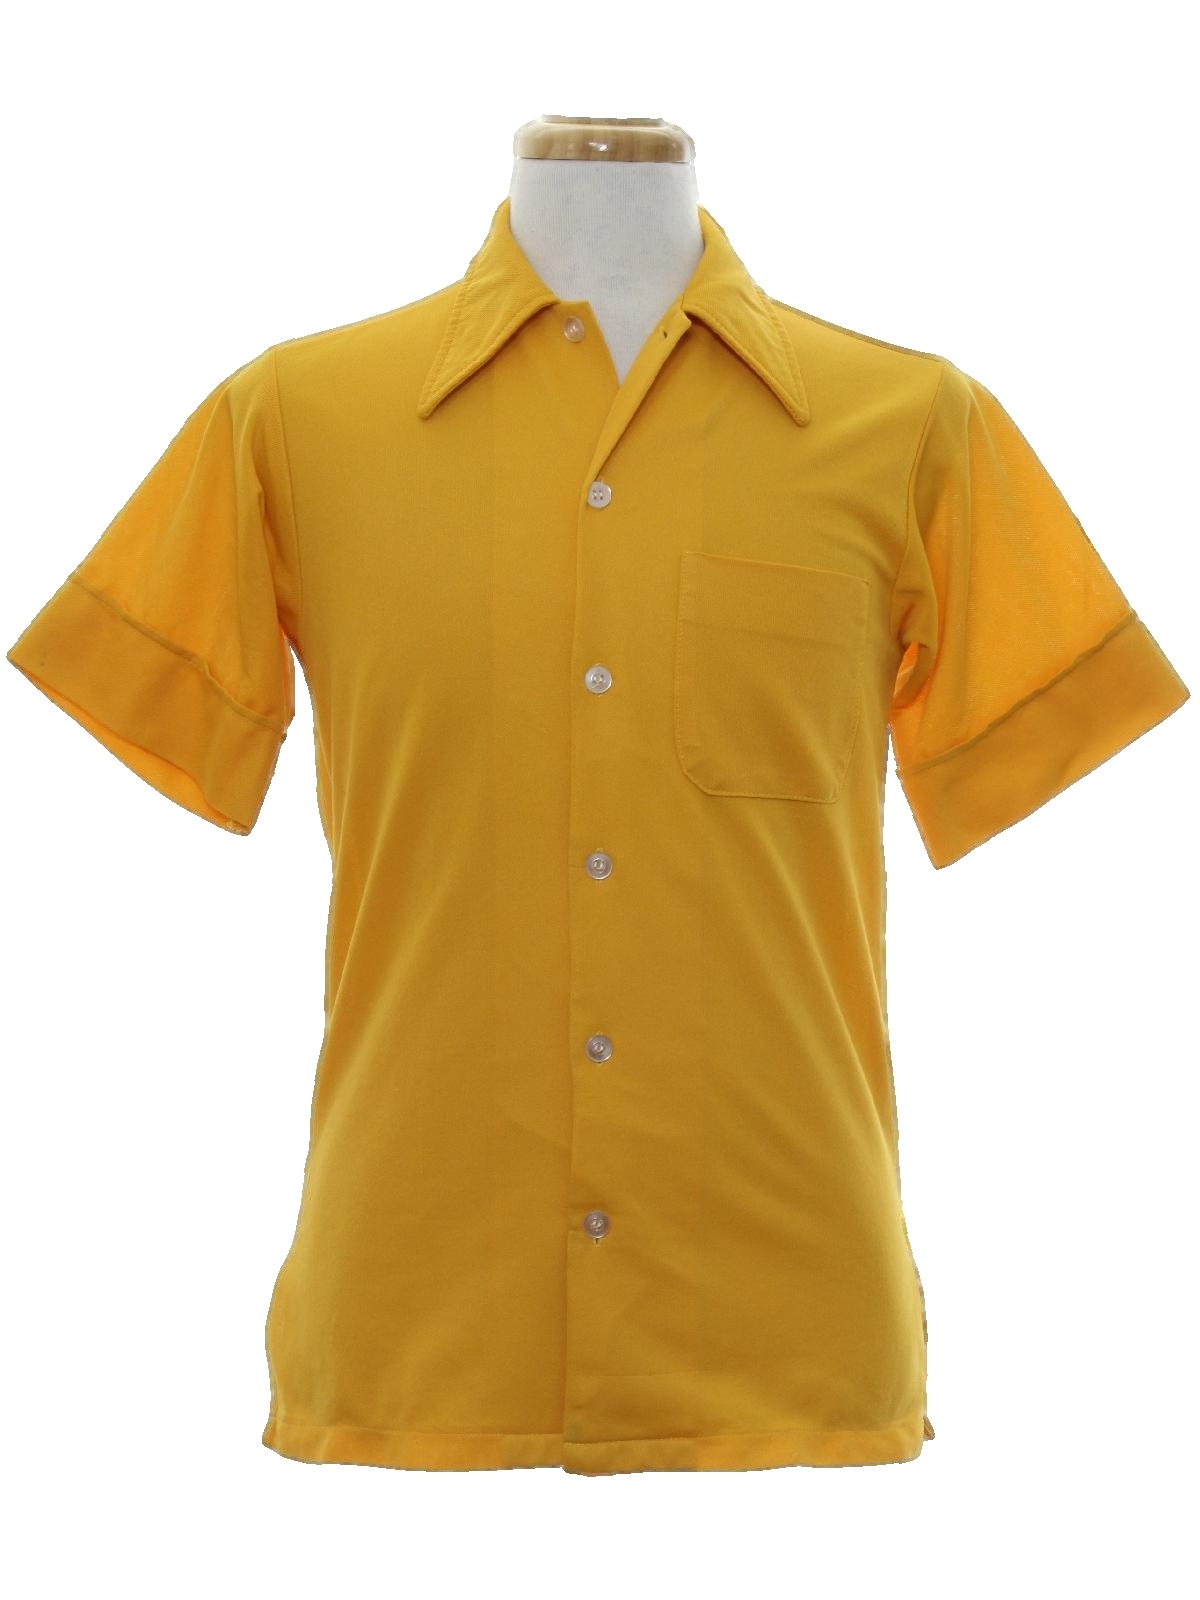 70s Vintage Pla Shirt: 70s -Pla-Shirt by Dunbrooke- Mens mustard yellow ...